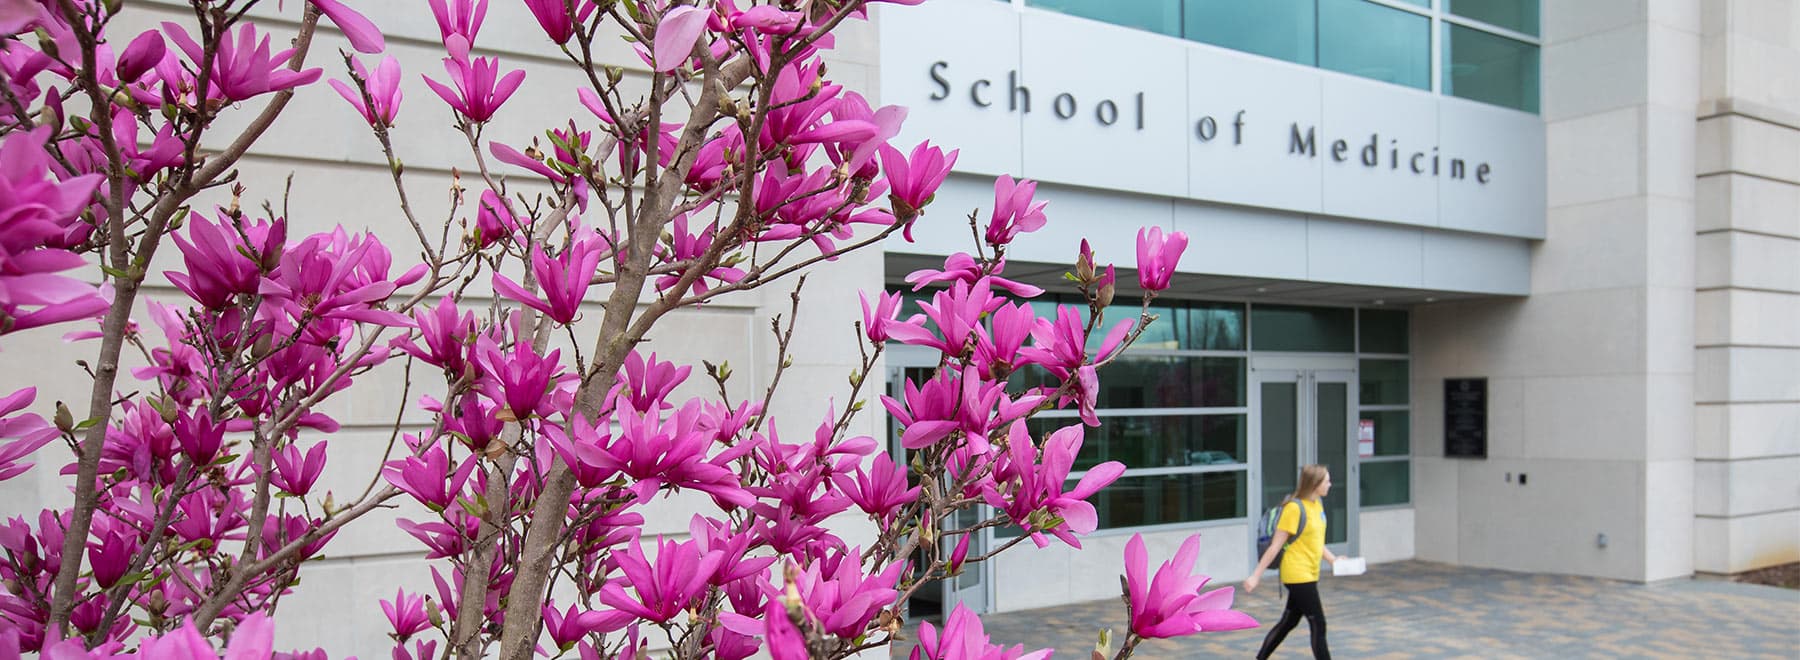 Japanese magnolias in front of School of Medicine building.